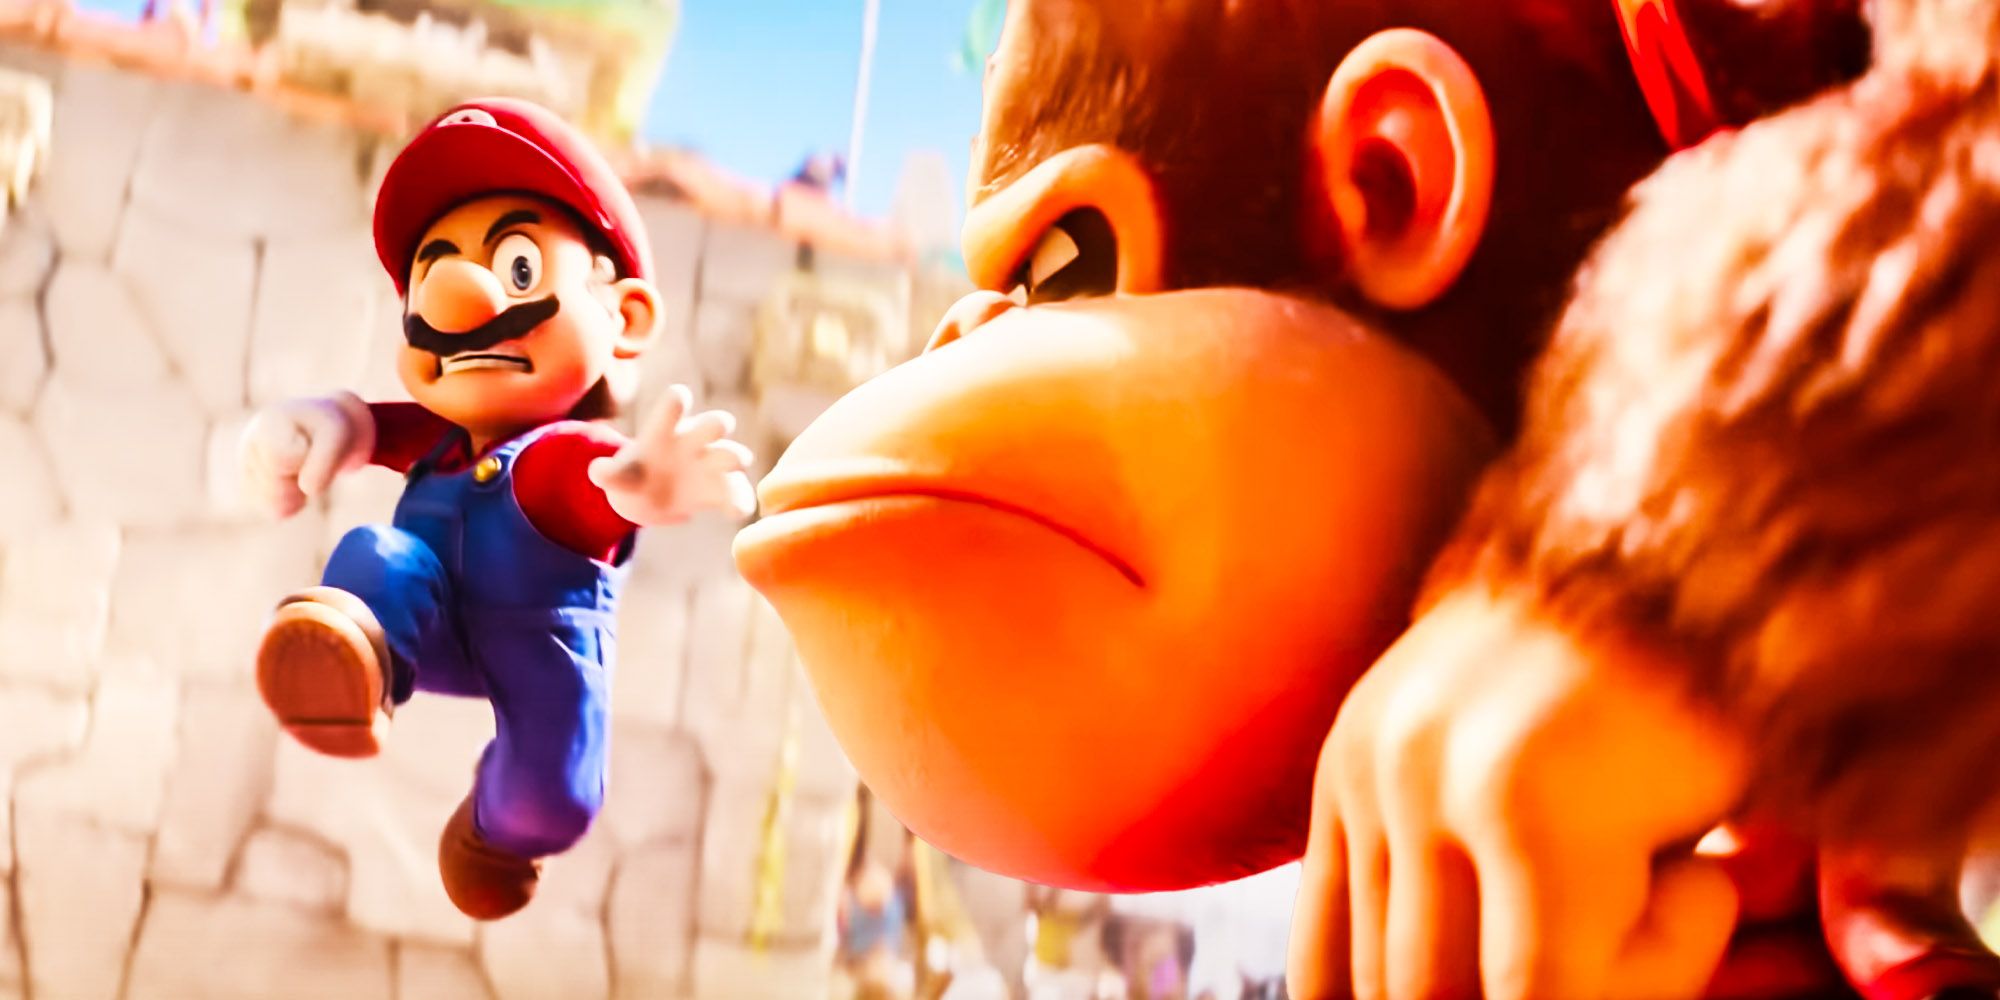 Super Mario ready to aim at Donkey Kong while Donkey Kong is made in Super Mario Bros Movie